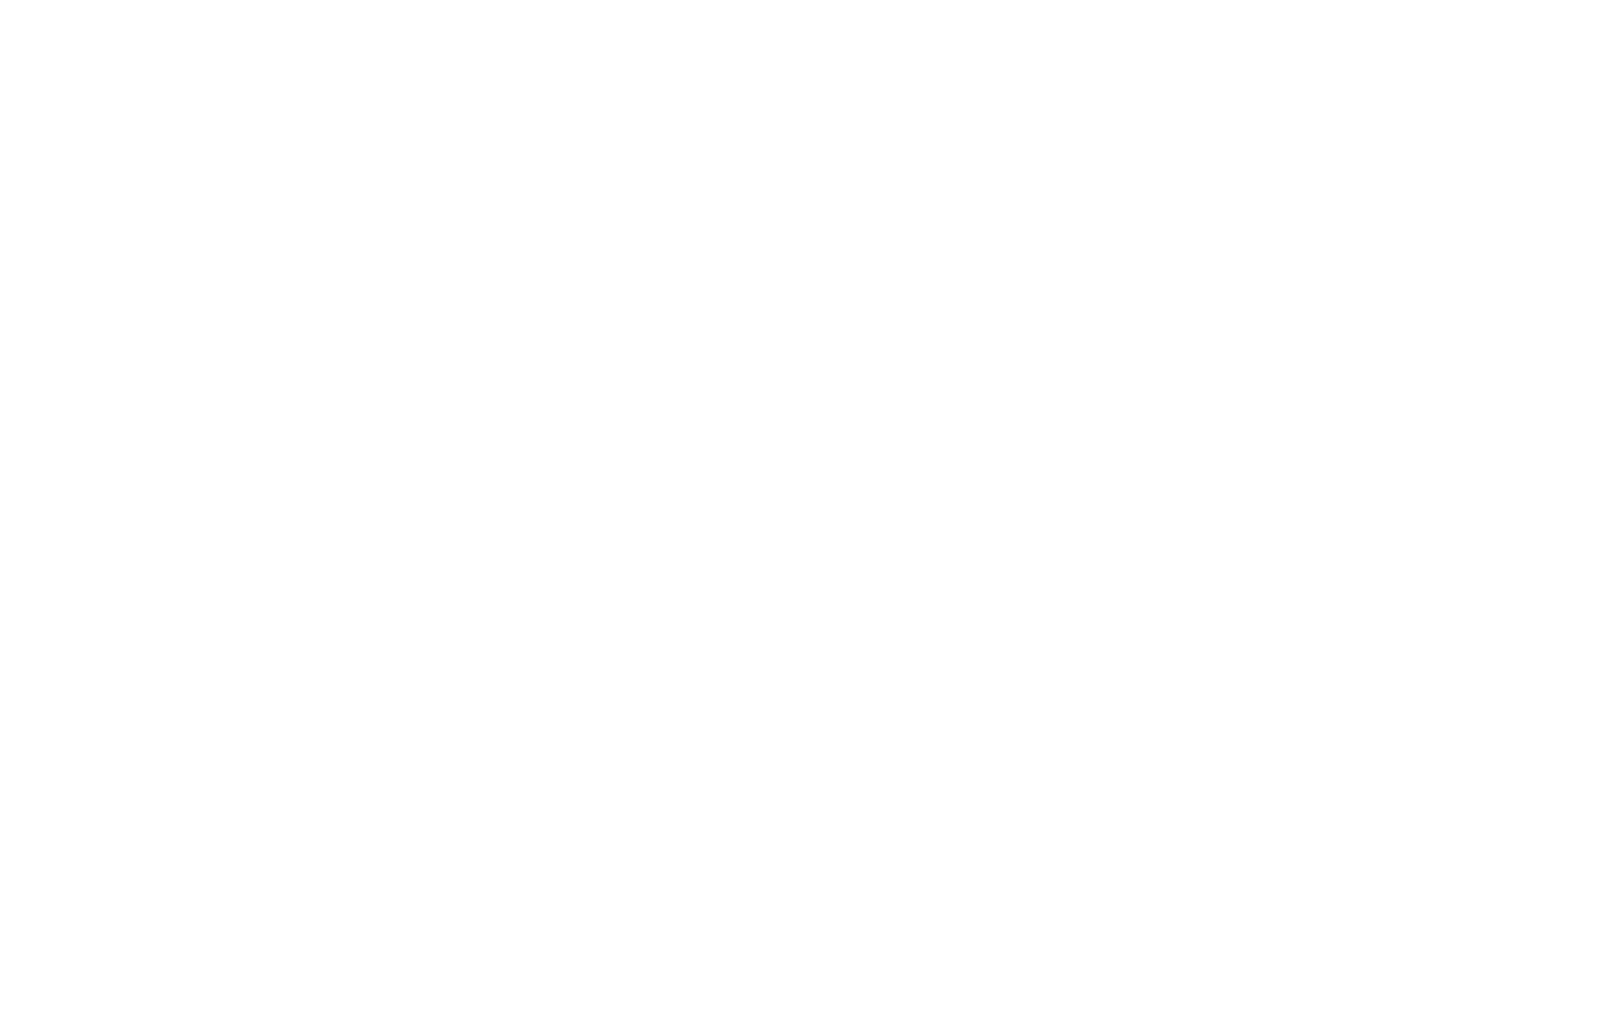 Gran Turismo™ 7 Online Manual 